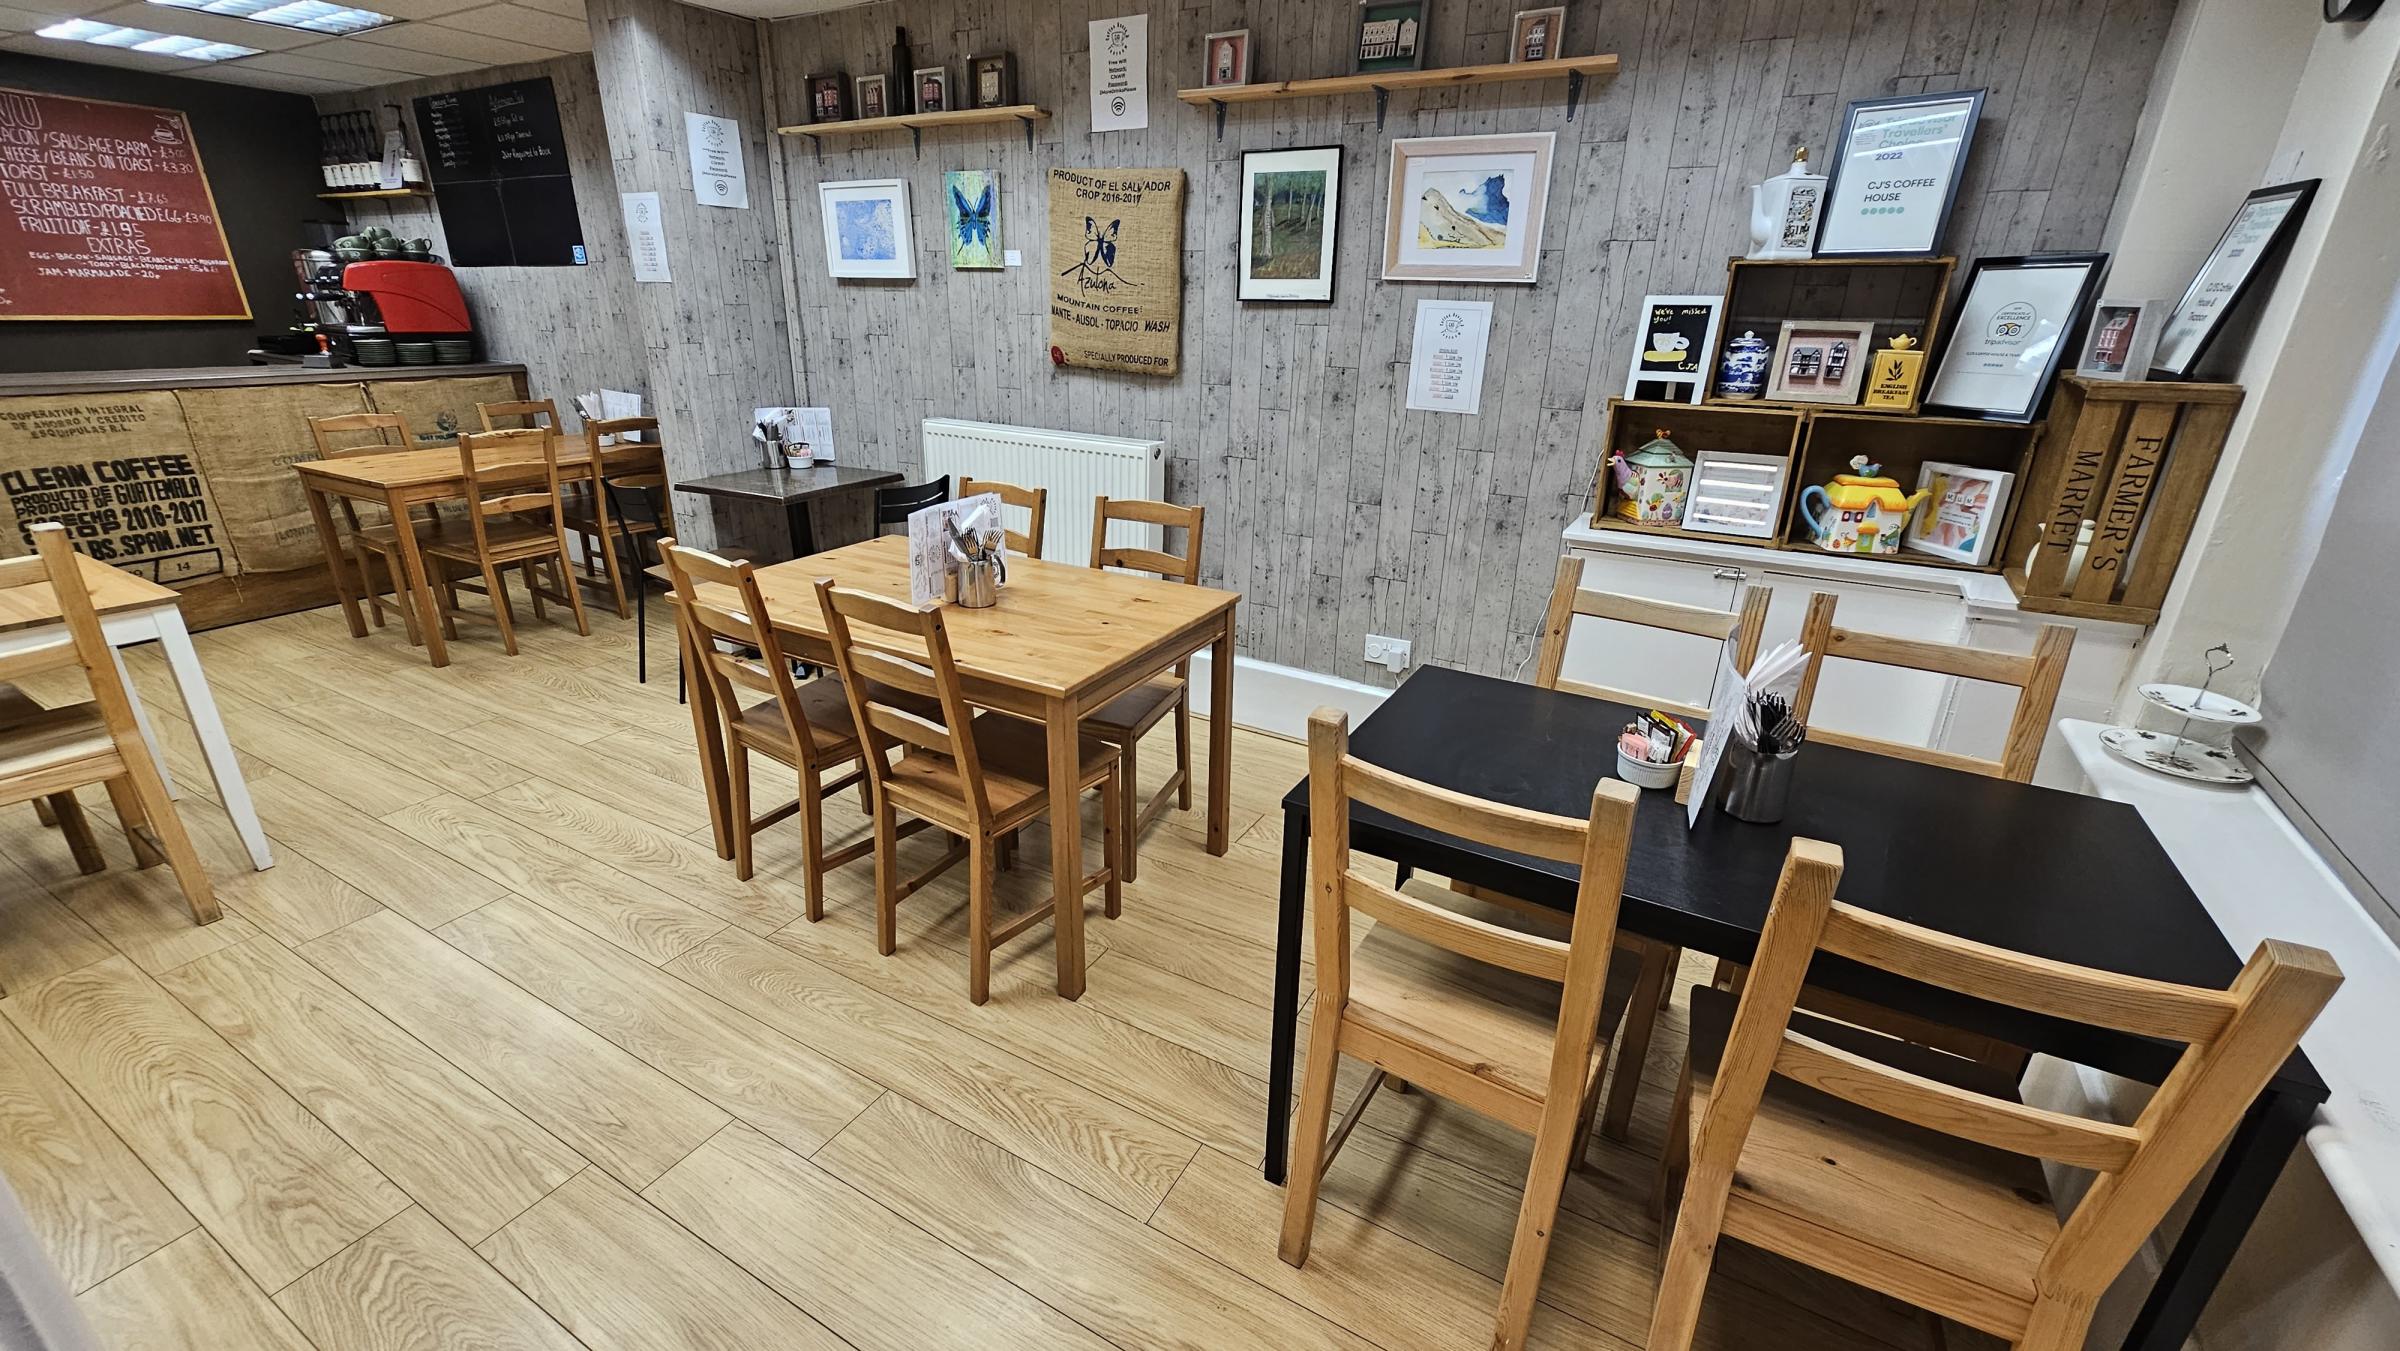 CJs Coffee House and Tearoom opened on Warrignton Road in 2018